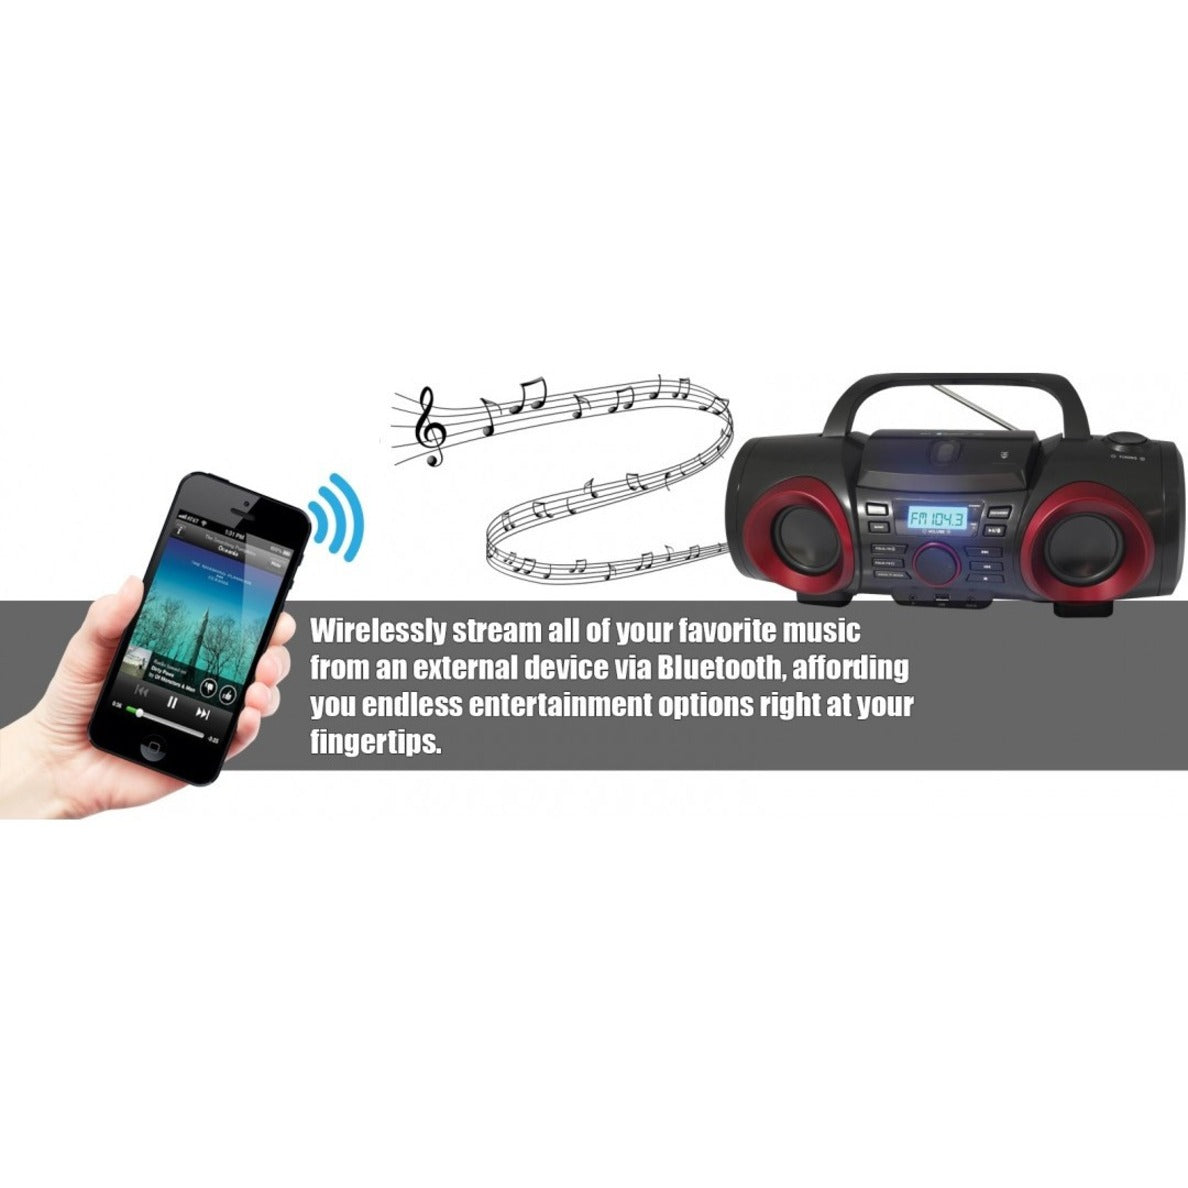 Naxa NPB267 MP3/CD Boombox with Bluetooth, Portable Radio/CD Player BoomBox